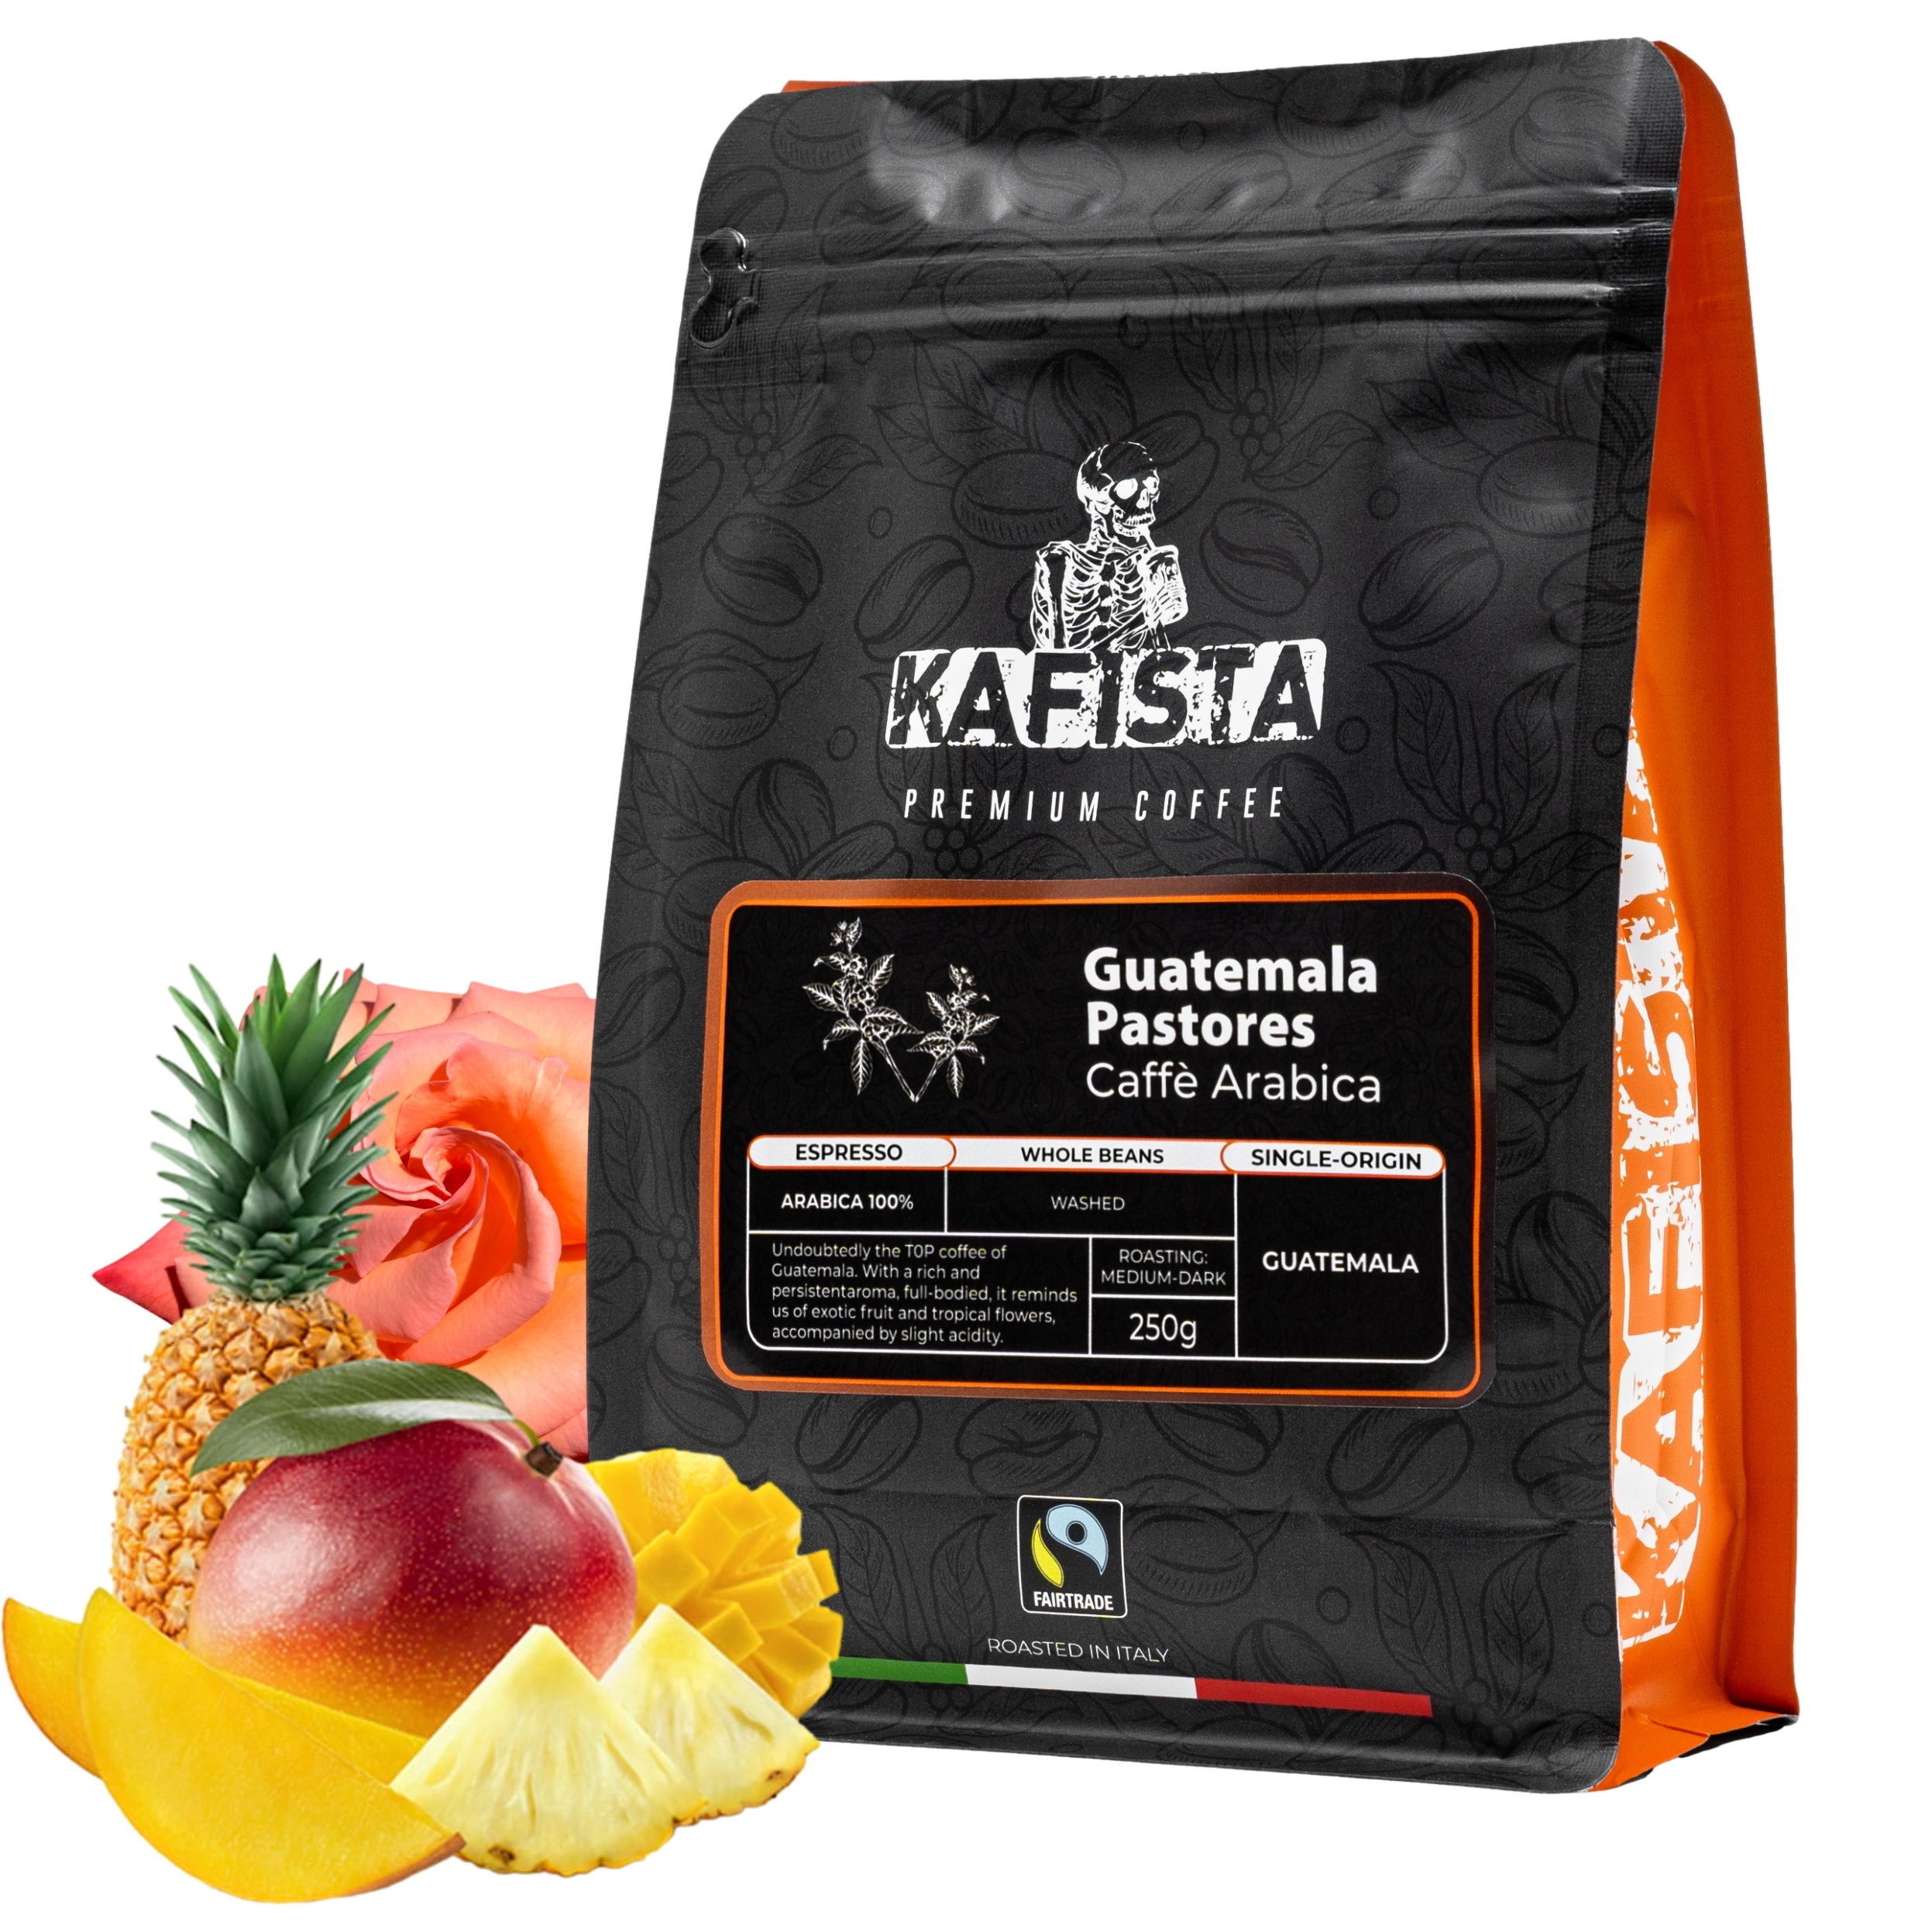 Kafista "Guatemala Pastores" -Zrnková káva, 100% Arabica Single Origin Espresso Káva, Pražená v Itálii Množství: 500g (2x250g)